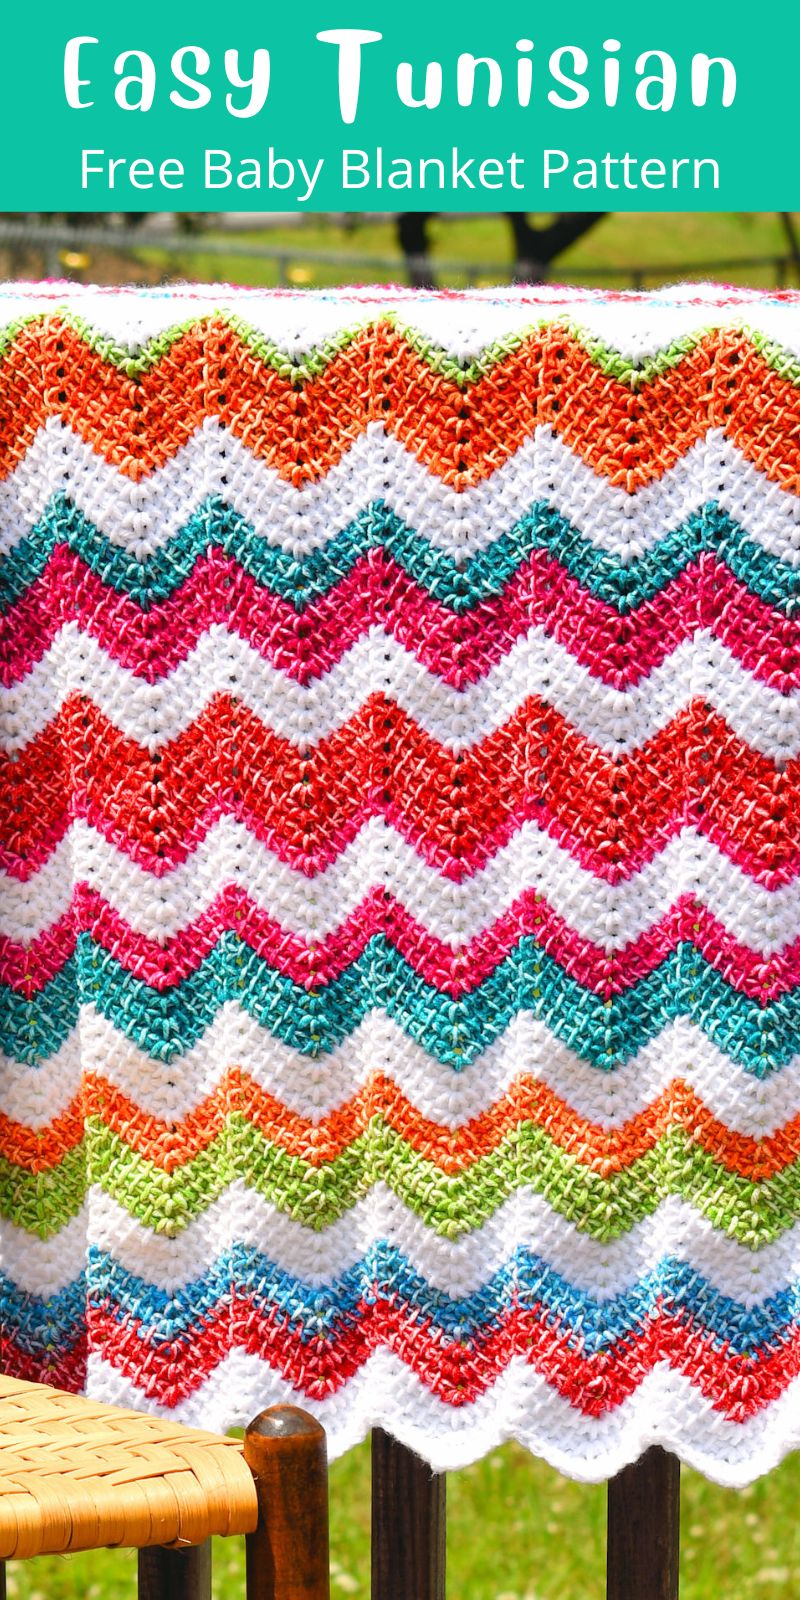 pinterest pin for Happy Ripple Tunisian crochet baby blanket